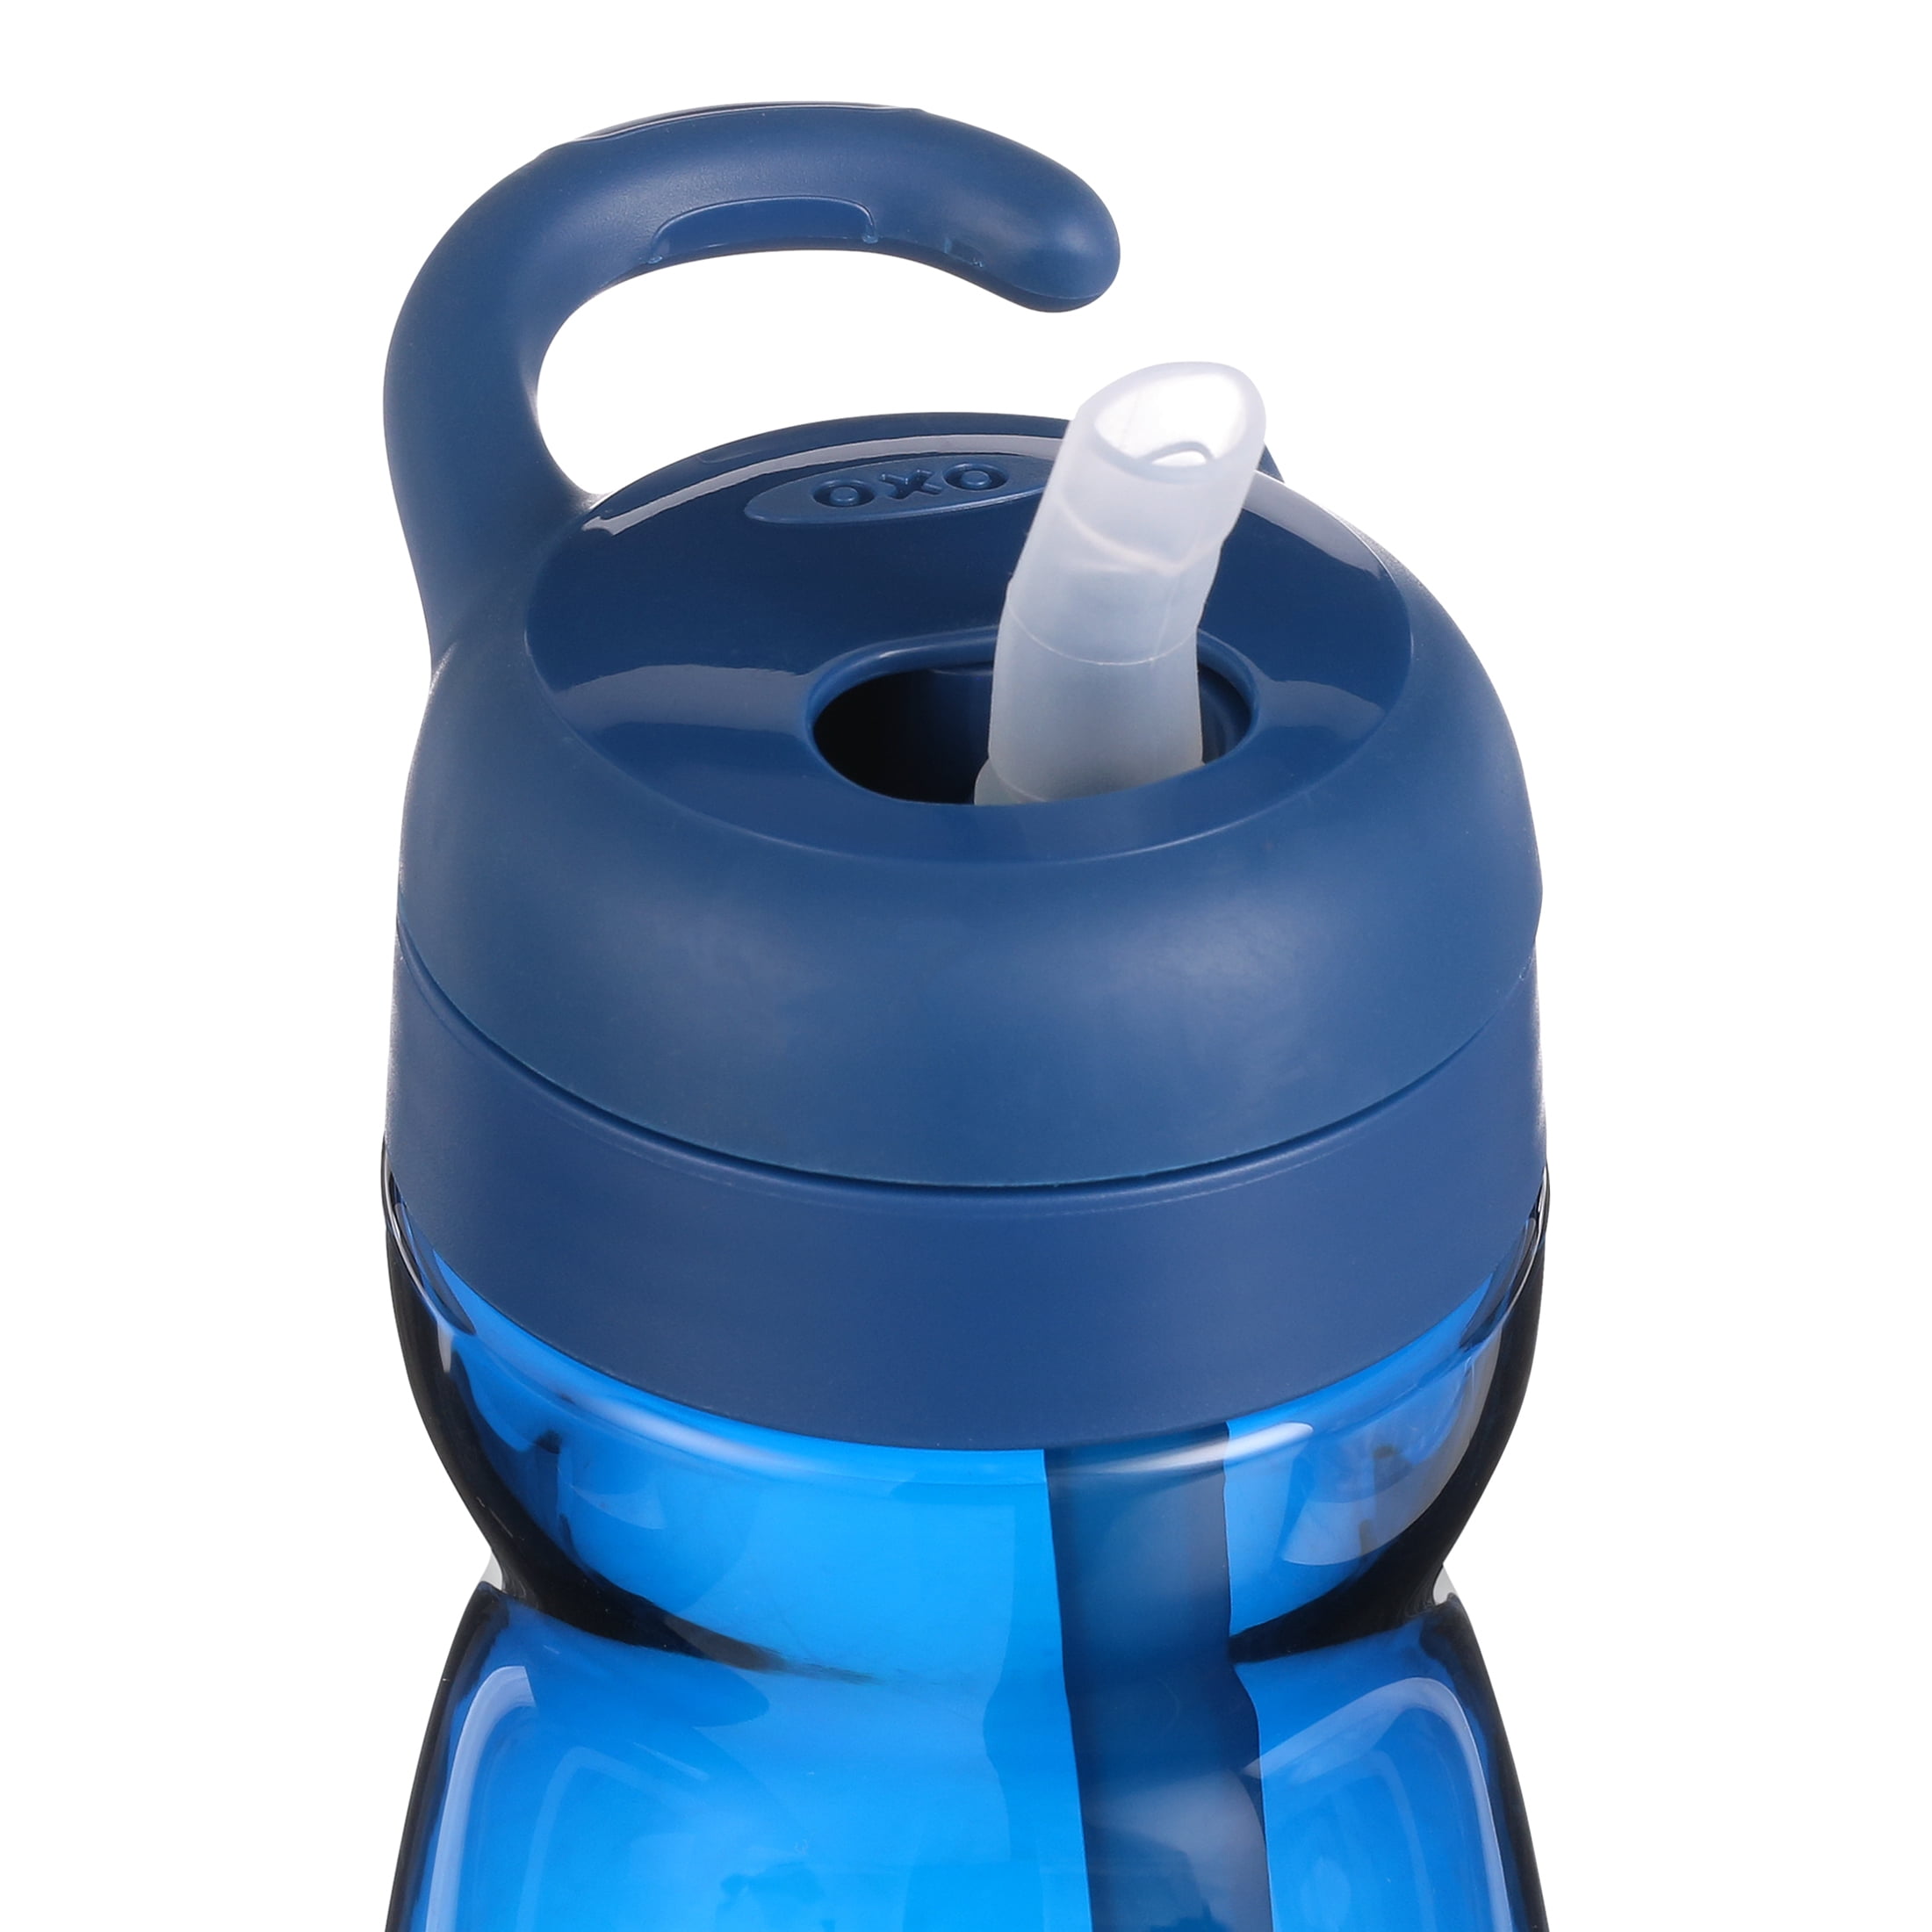 OXO Tot Adventure Water Bottle – 12 oz – Tickled Babies